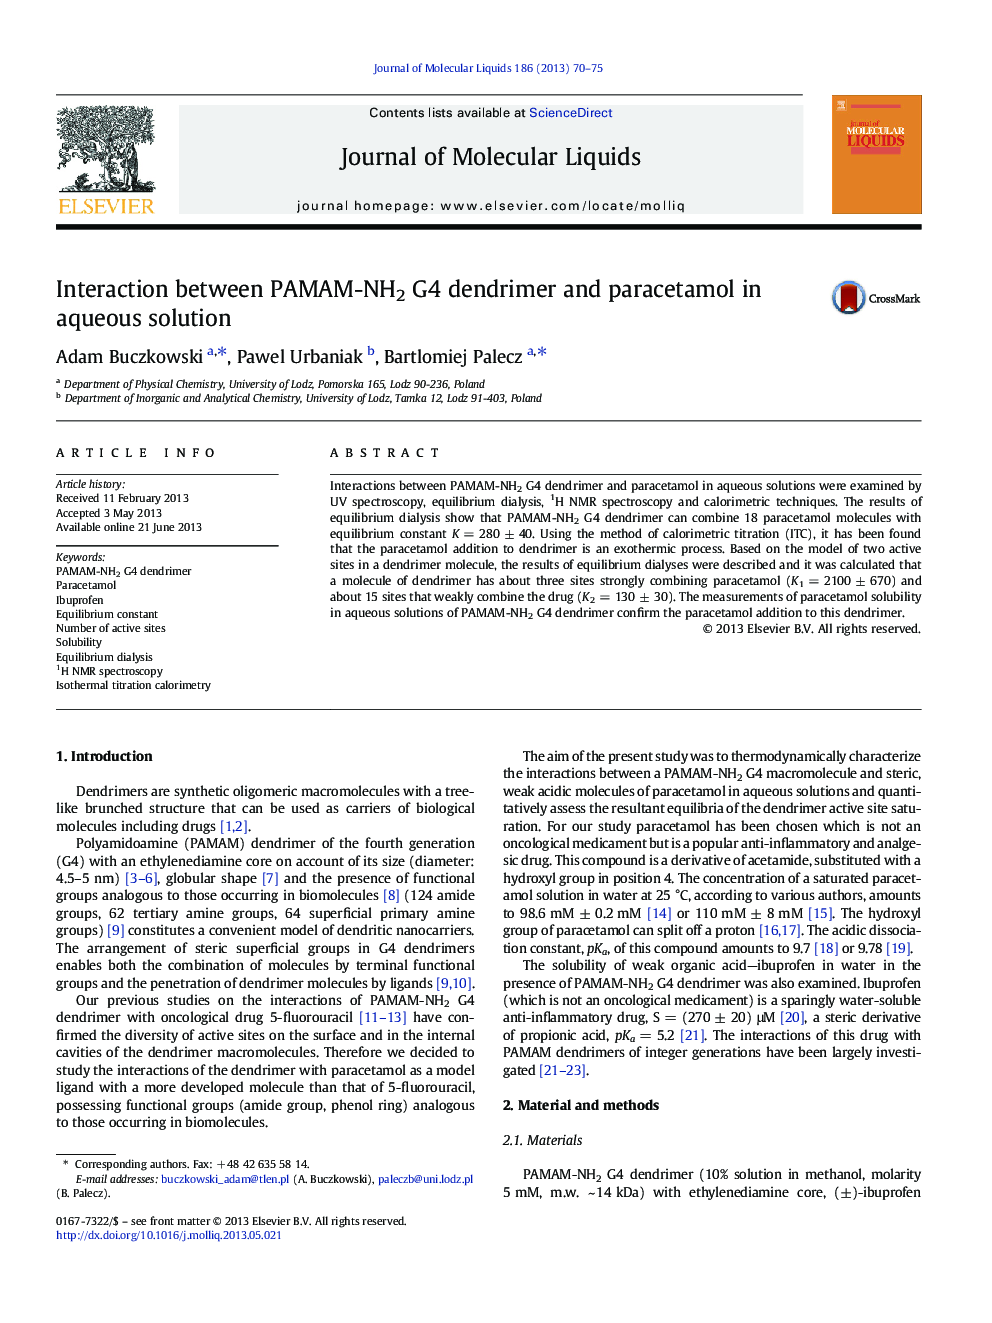 Interaction between PAMAM-NH2 G4 dendrimer and paracetamol in aqueous solution